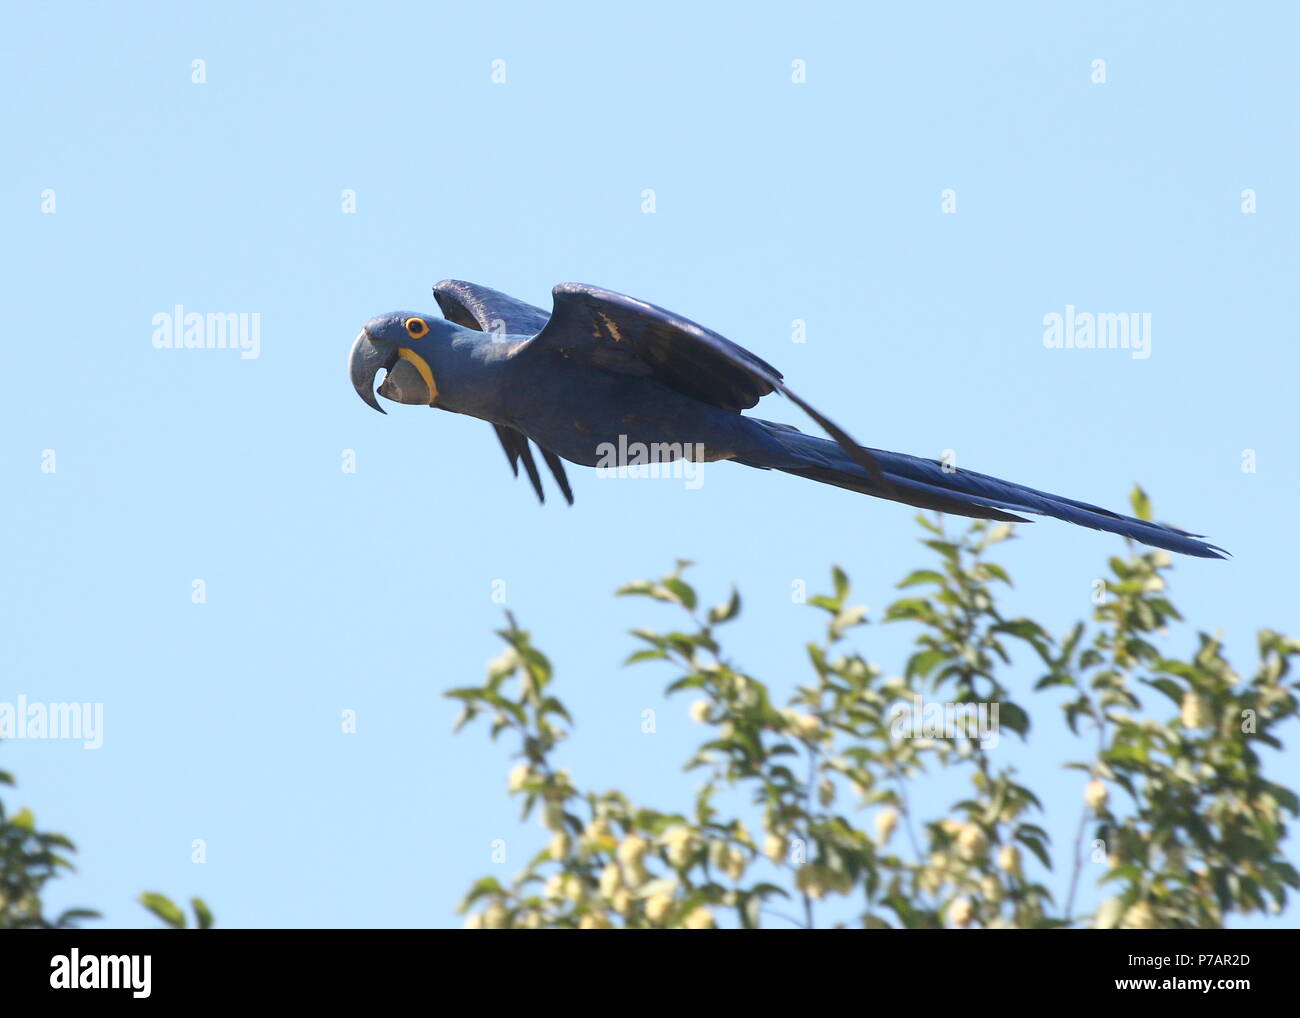 South American Hyacinth Macaw (Anodorhynchus hyacinthinus) in flight. Stock Photo